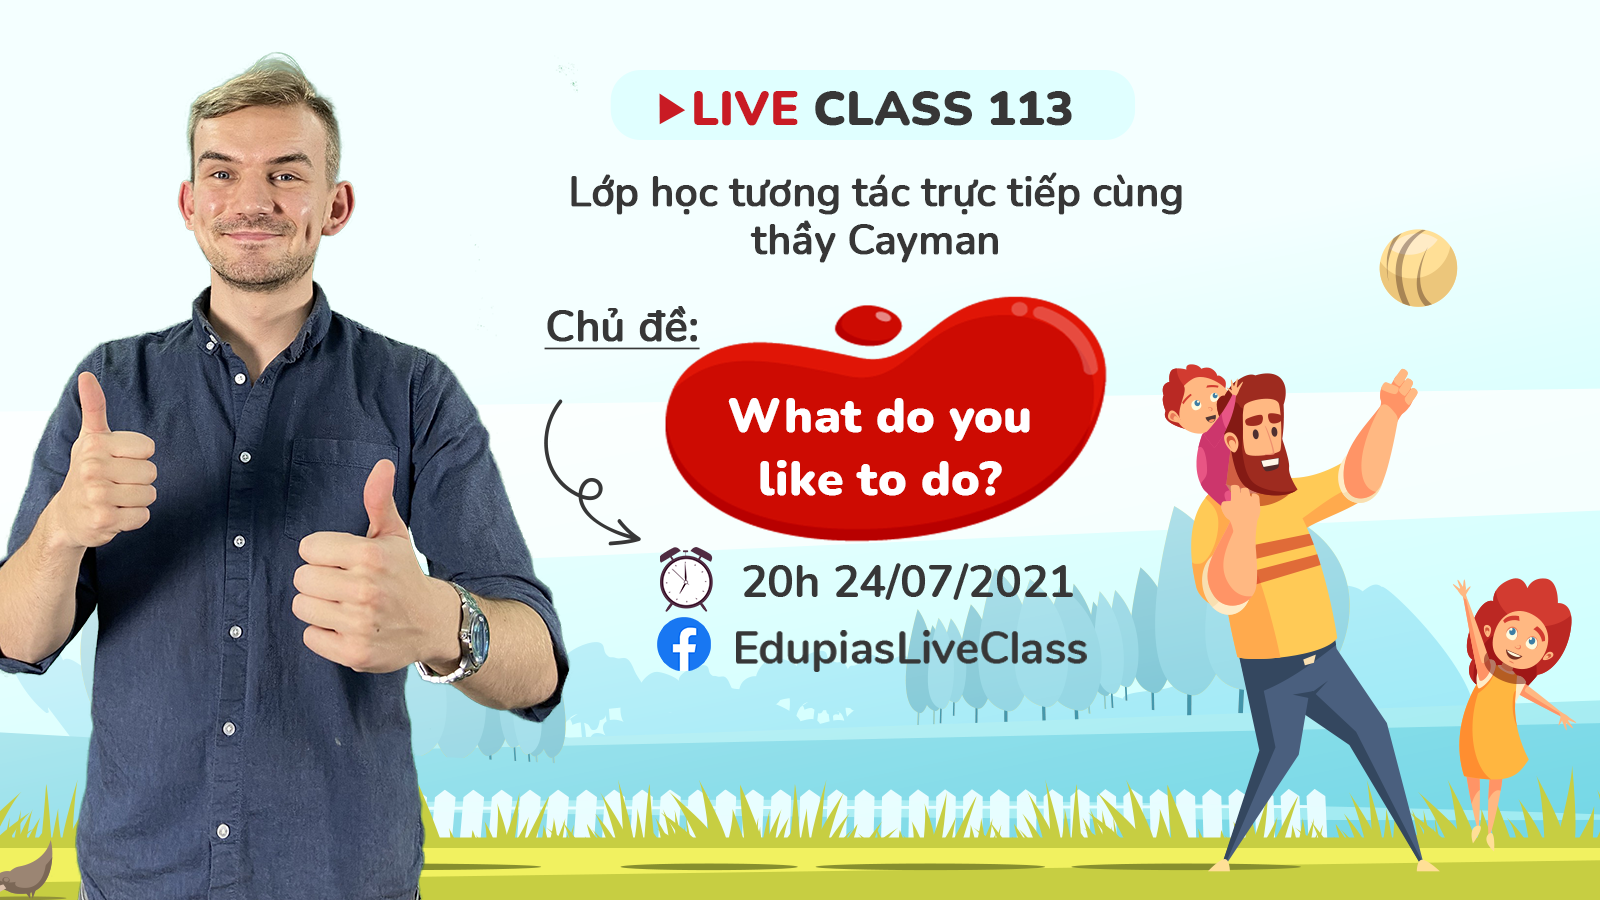 Live class tuần 113 - Chủ đề: What do you like to do?